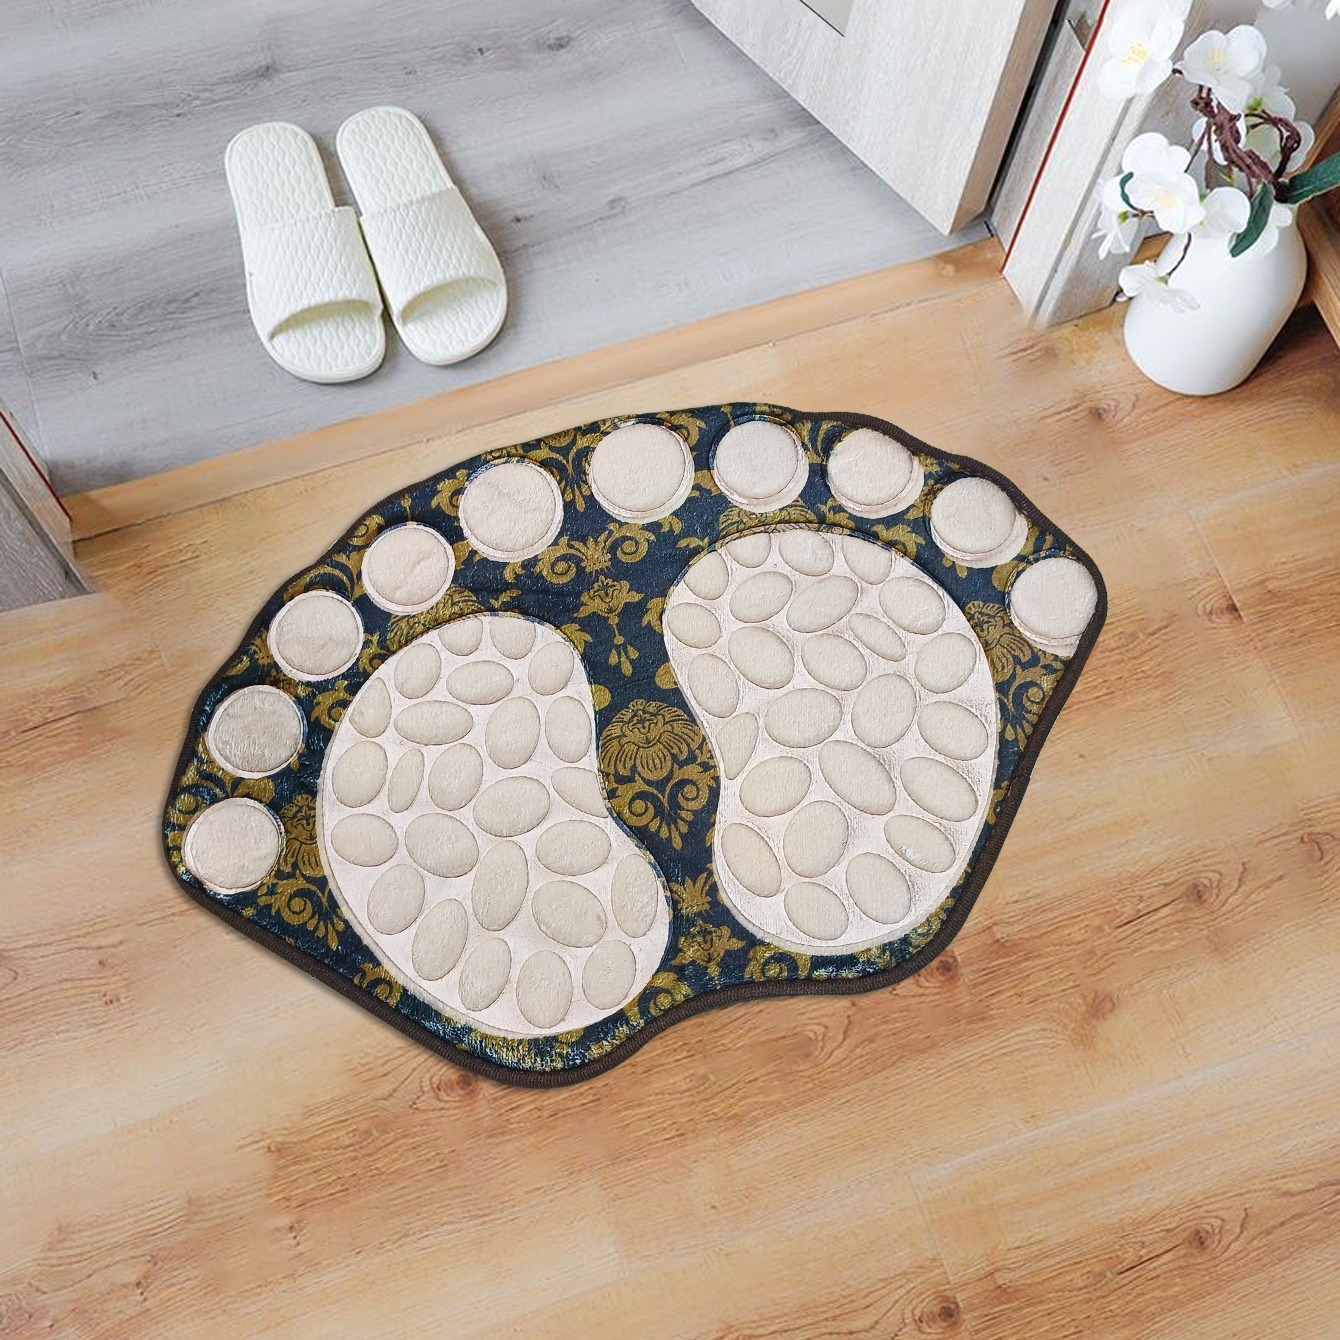 Big Feet Bath Toilet Mat Area Rugs Carpet Doormat Floor Mat